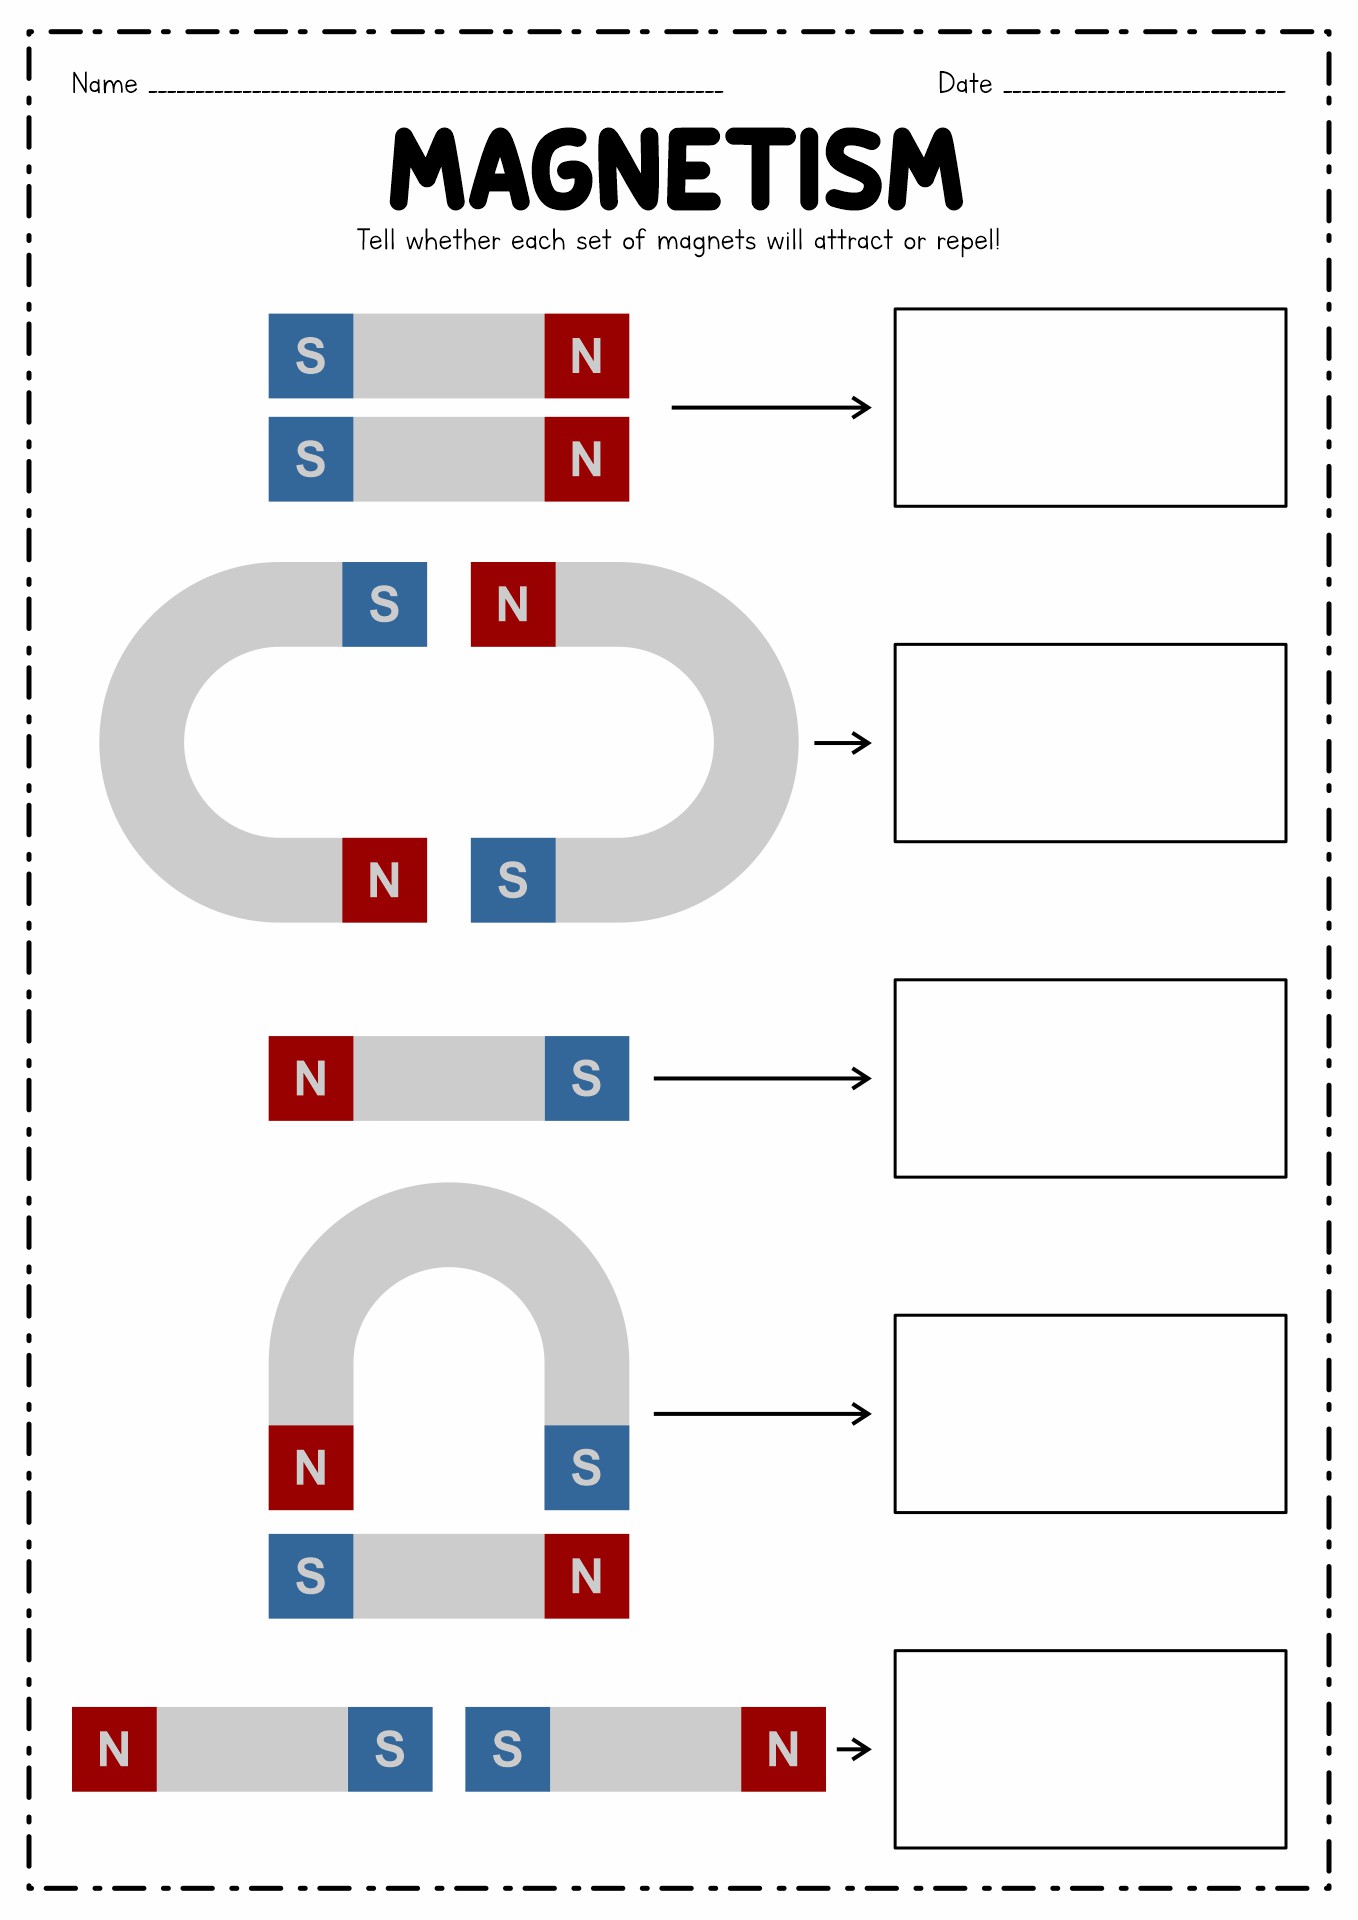 Magnets and Magnetism Worksheets Image